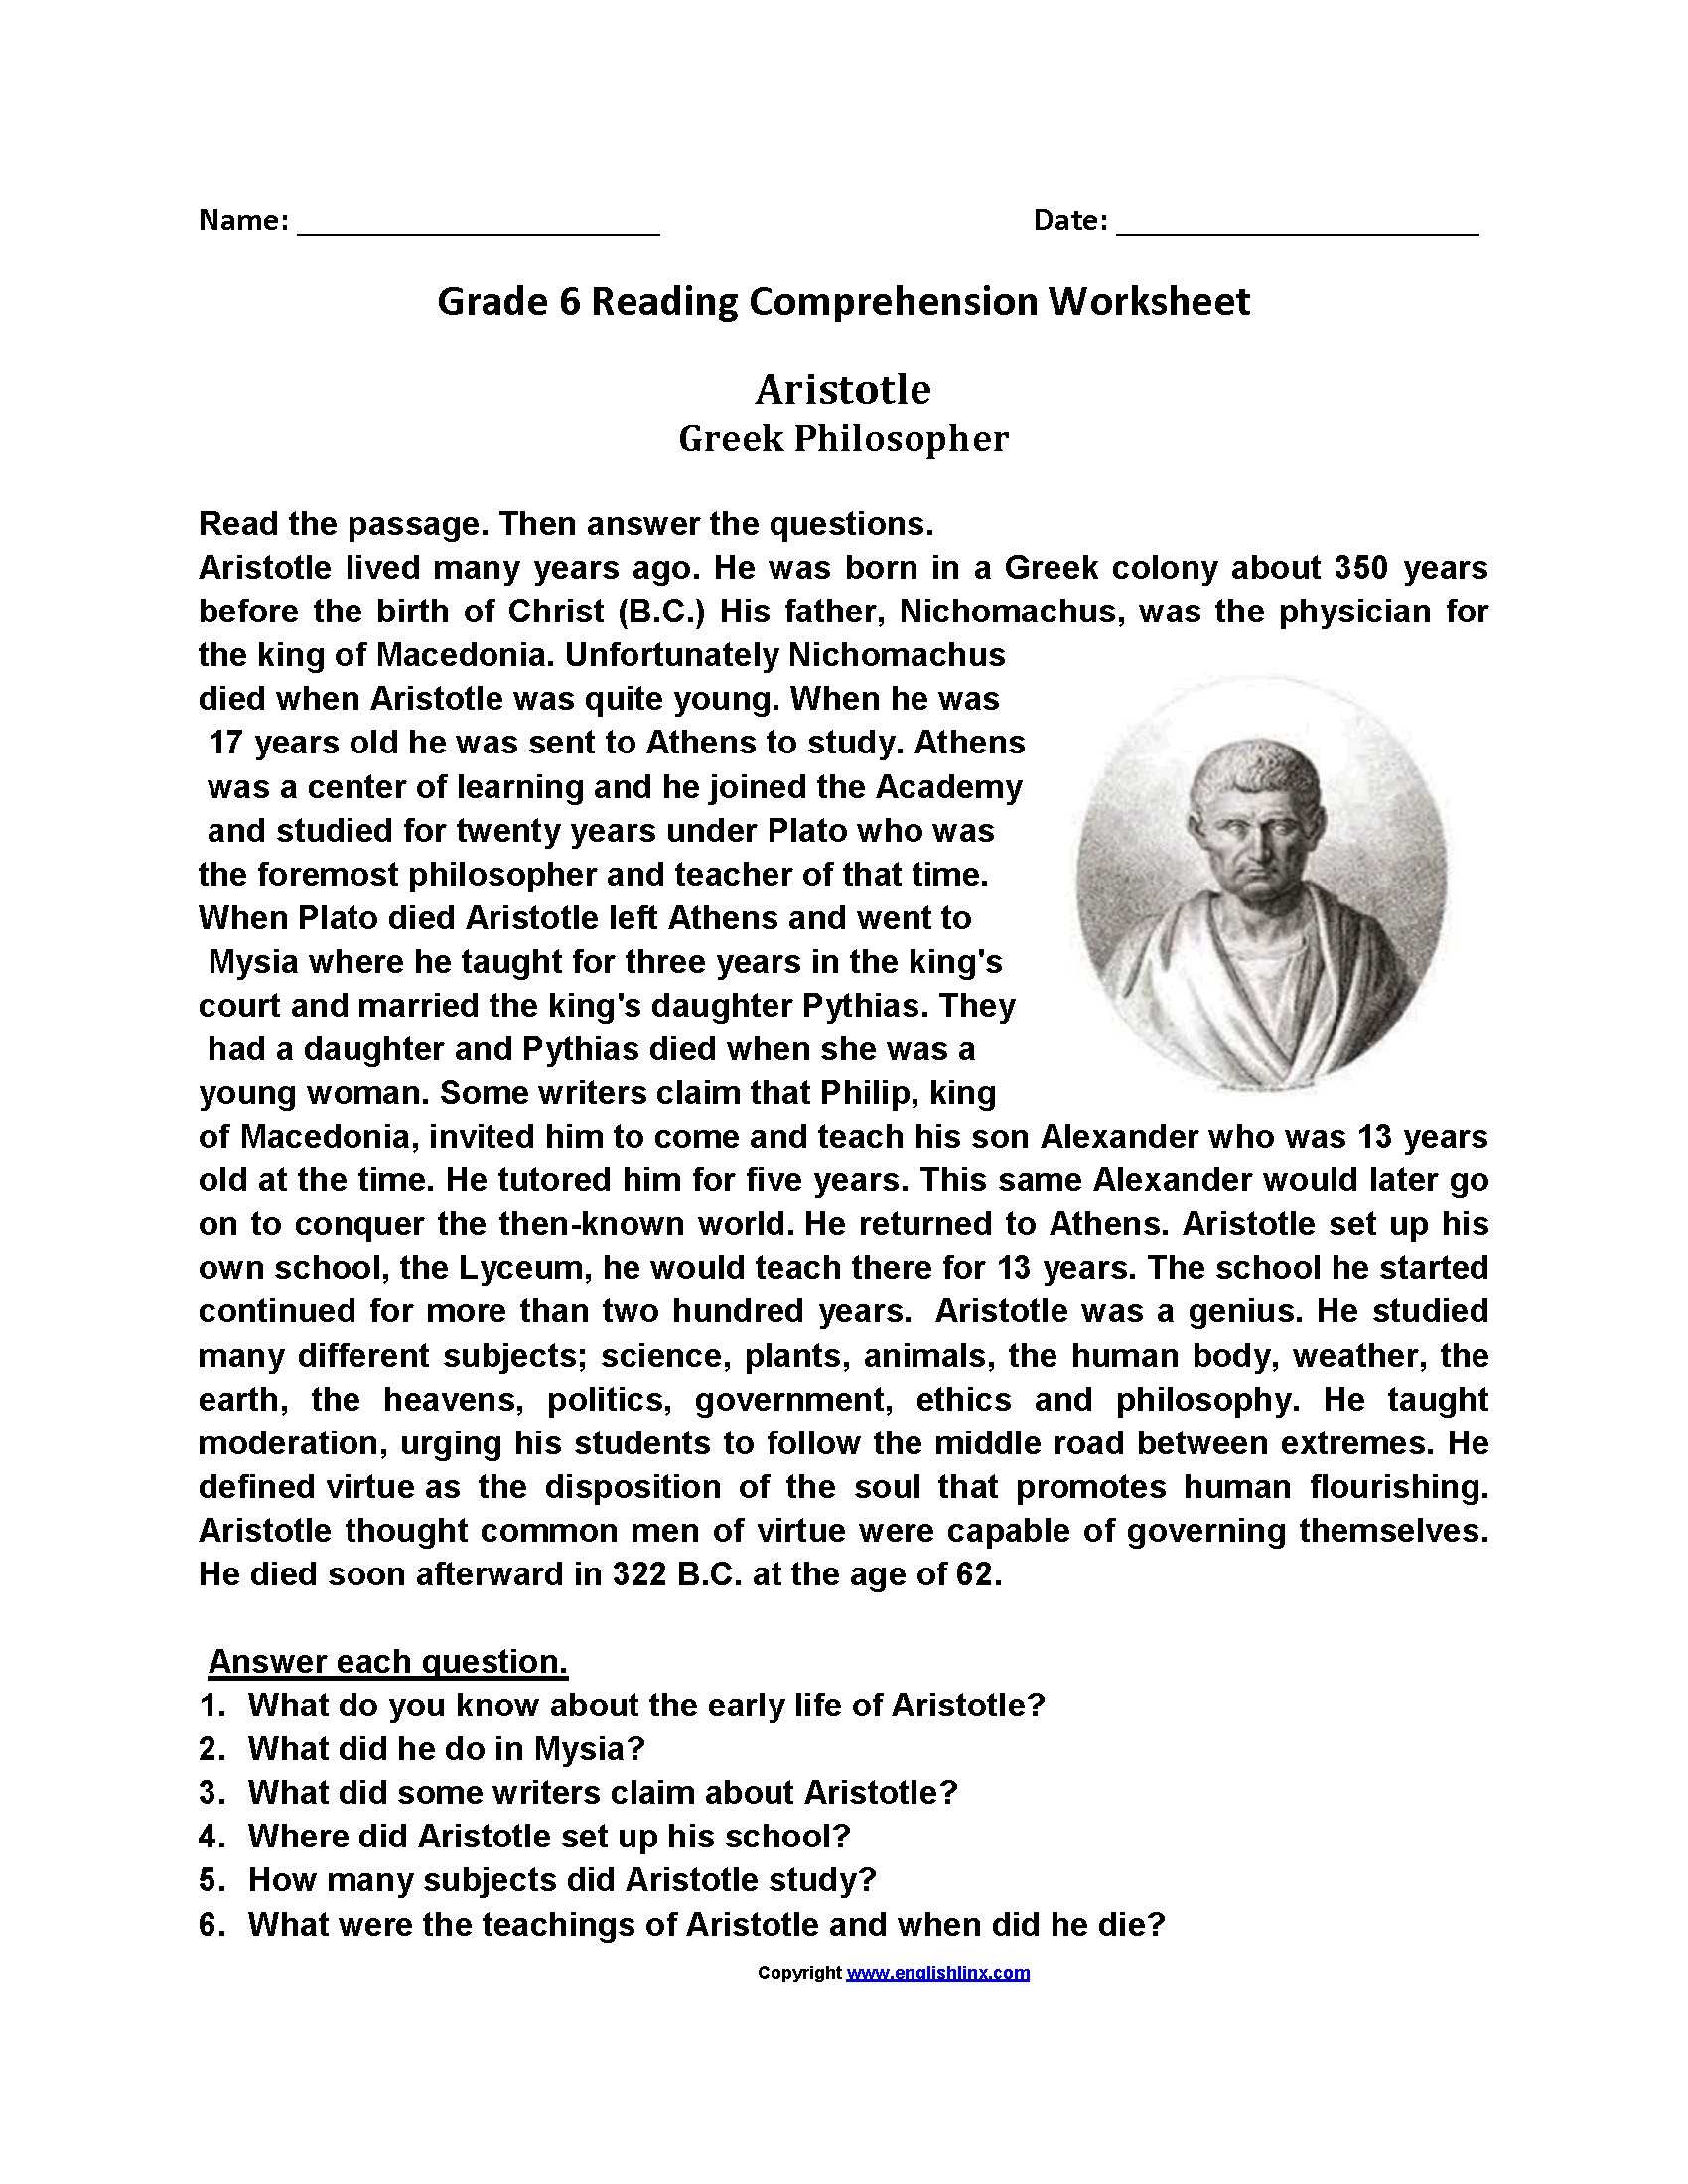 American Civil War Reading Comprehension Worksheet Answers or Prehension Worksheets Level 6 Valid 6th Grade Reading Prehension